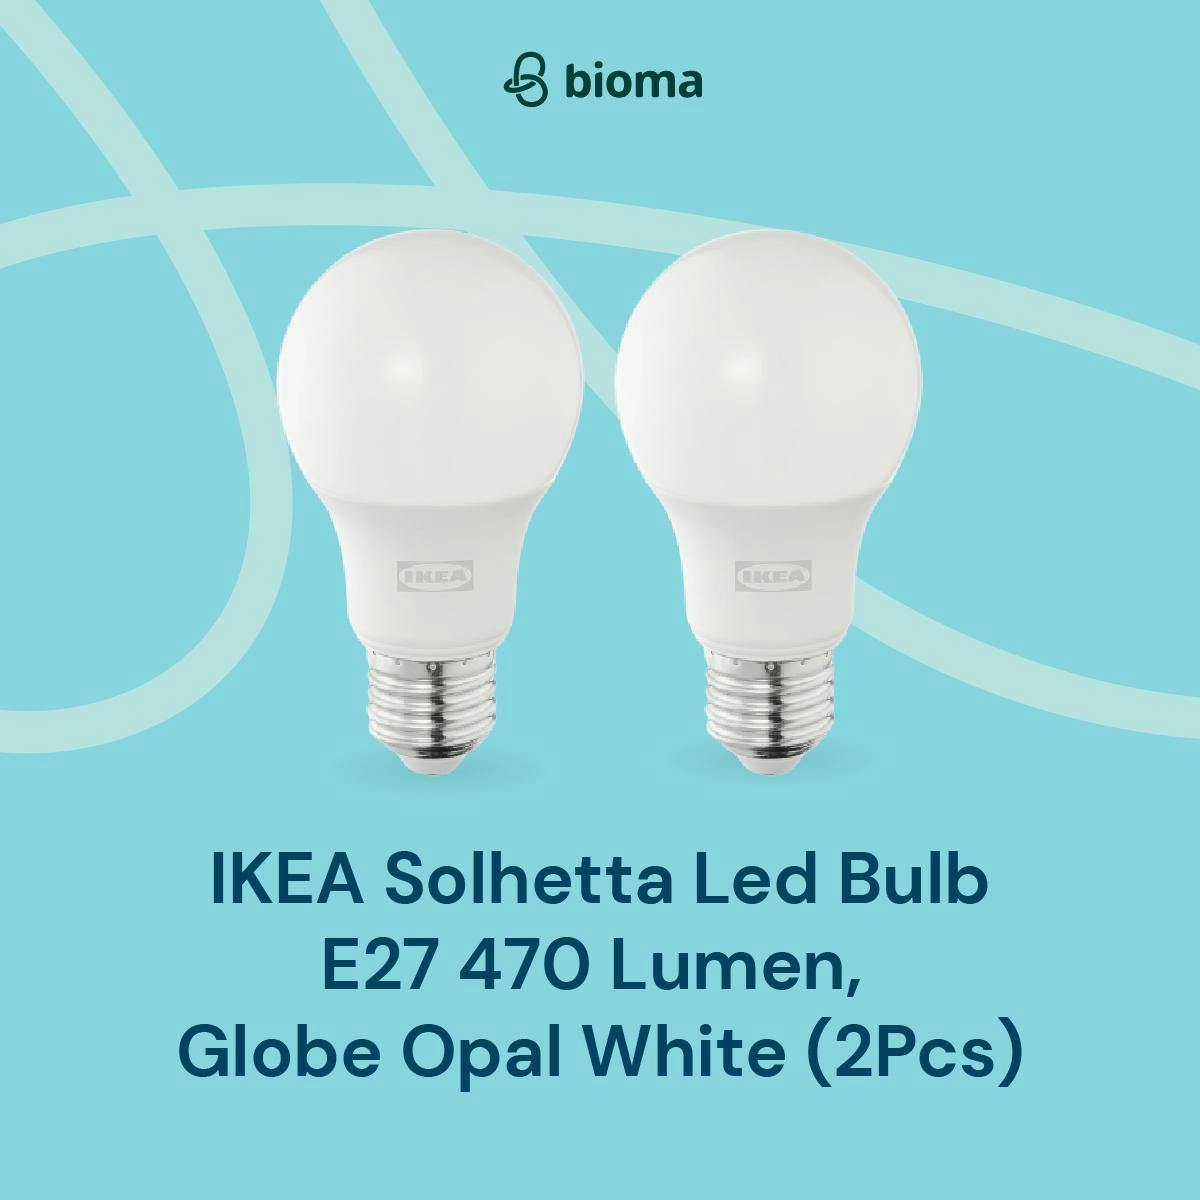 Solhetta Led Bulb E27 470 Lumen, Globe Opal White (2Pcs)